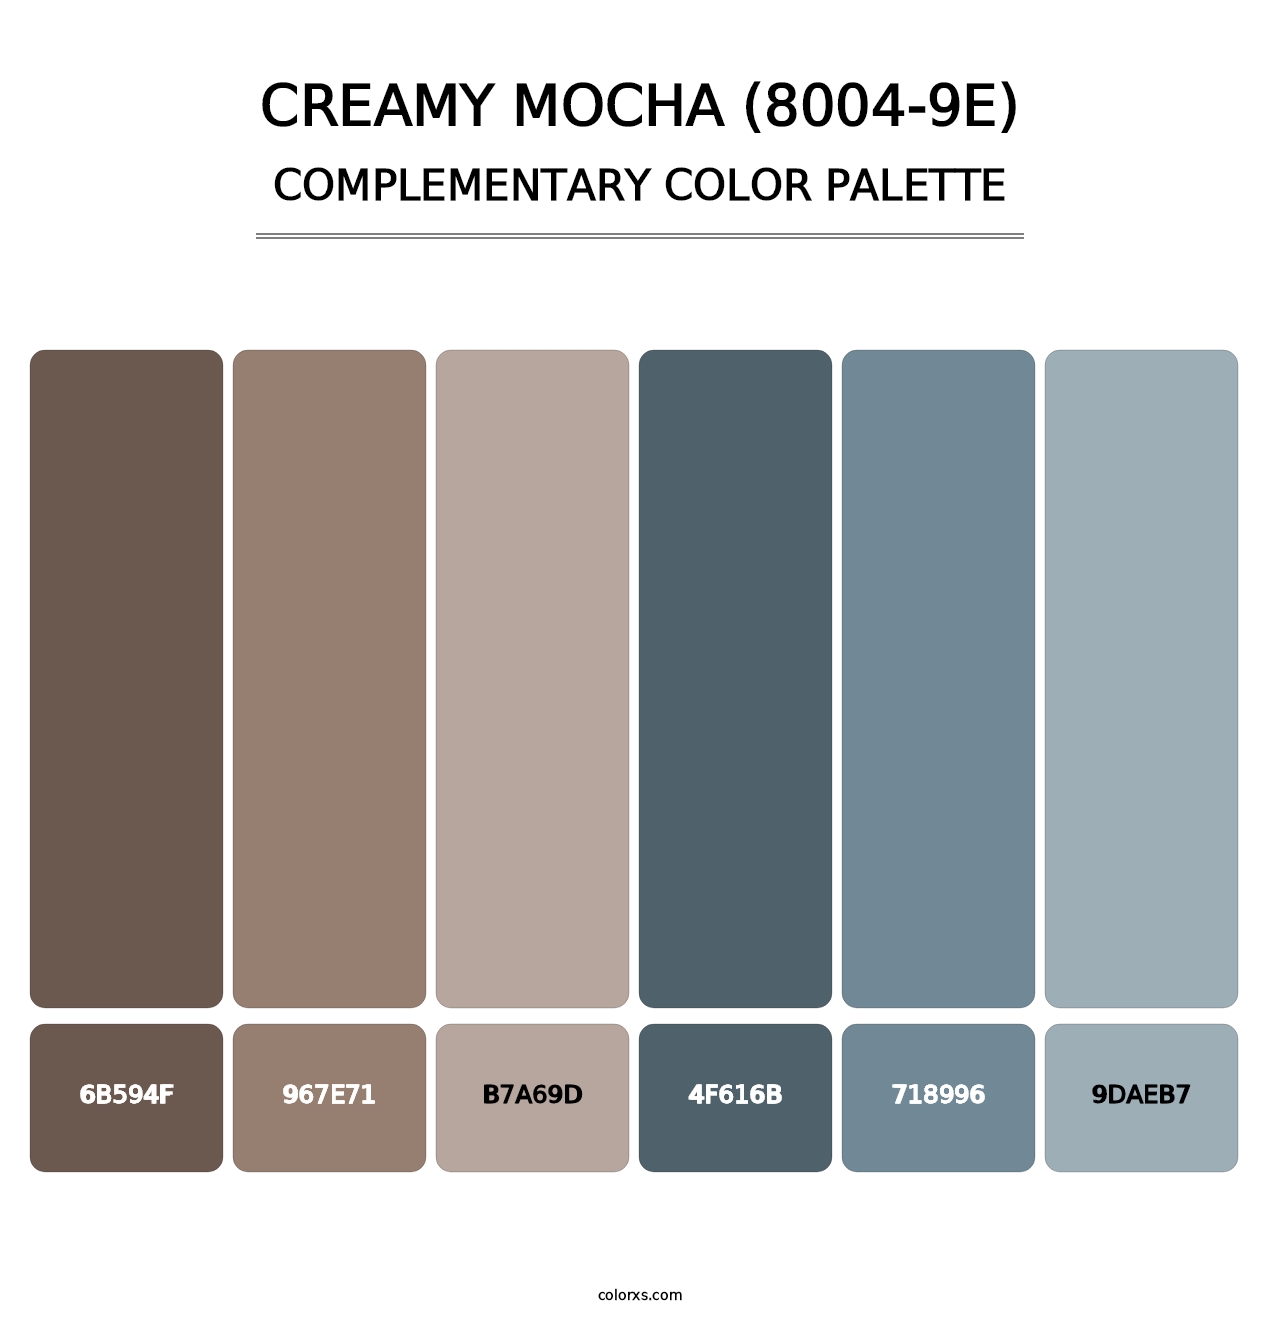 Creamy Mocha (8004-9E) - Complementary Color Palette